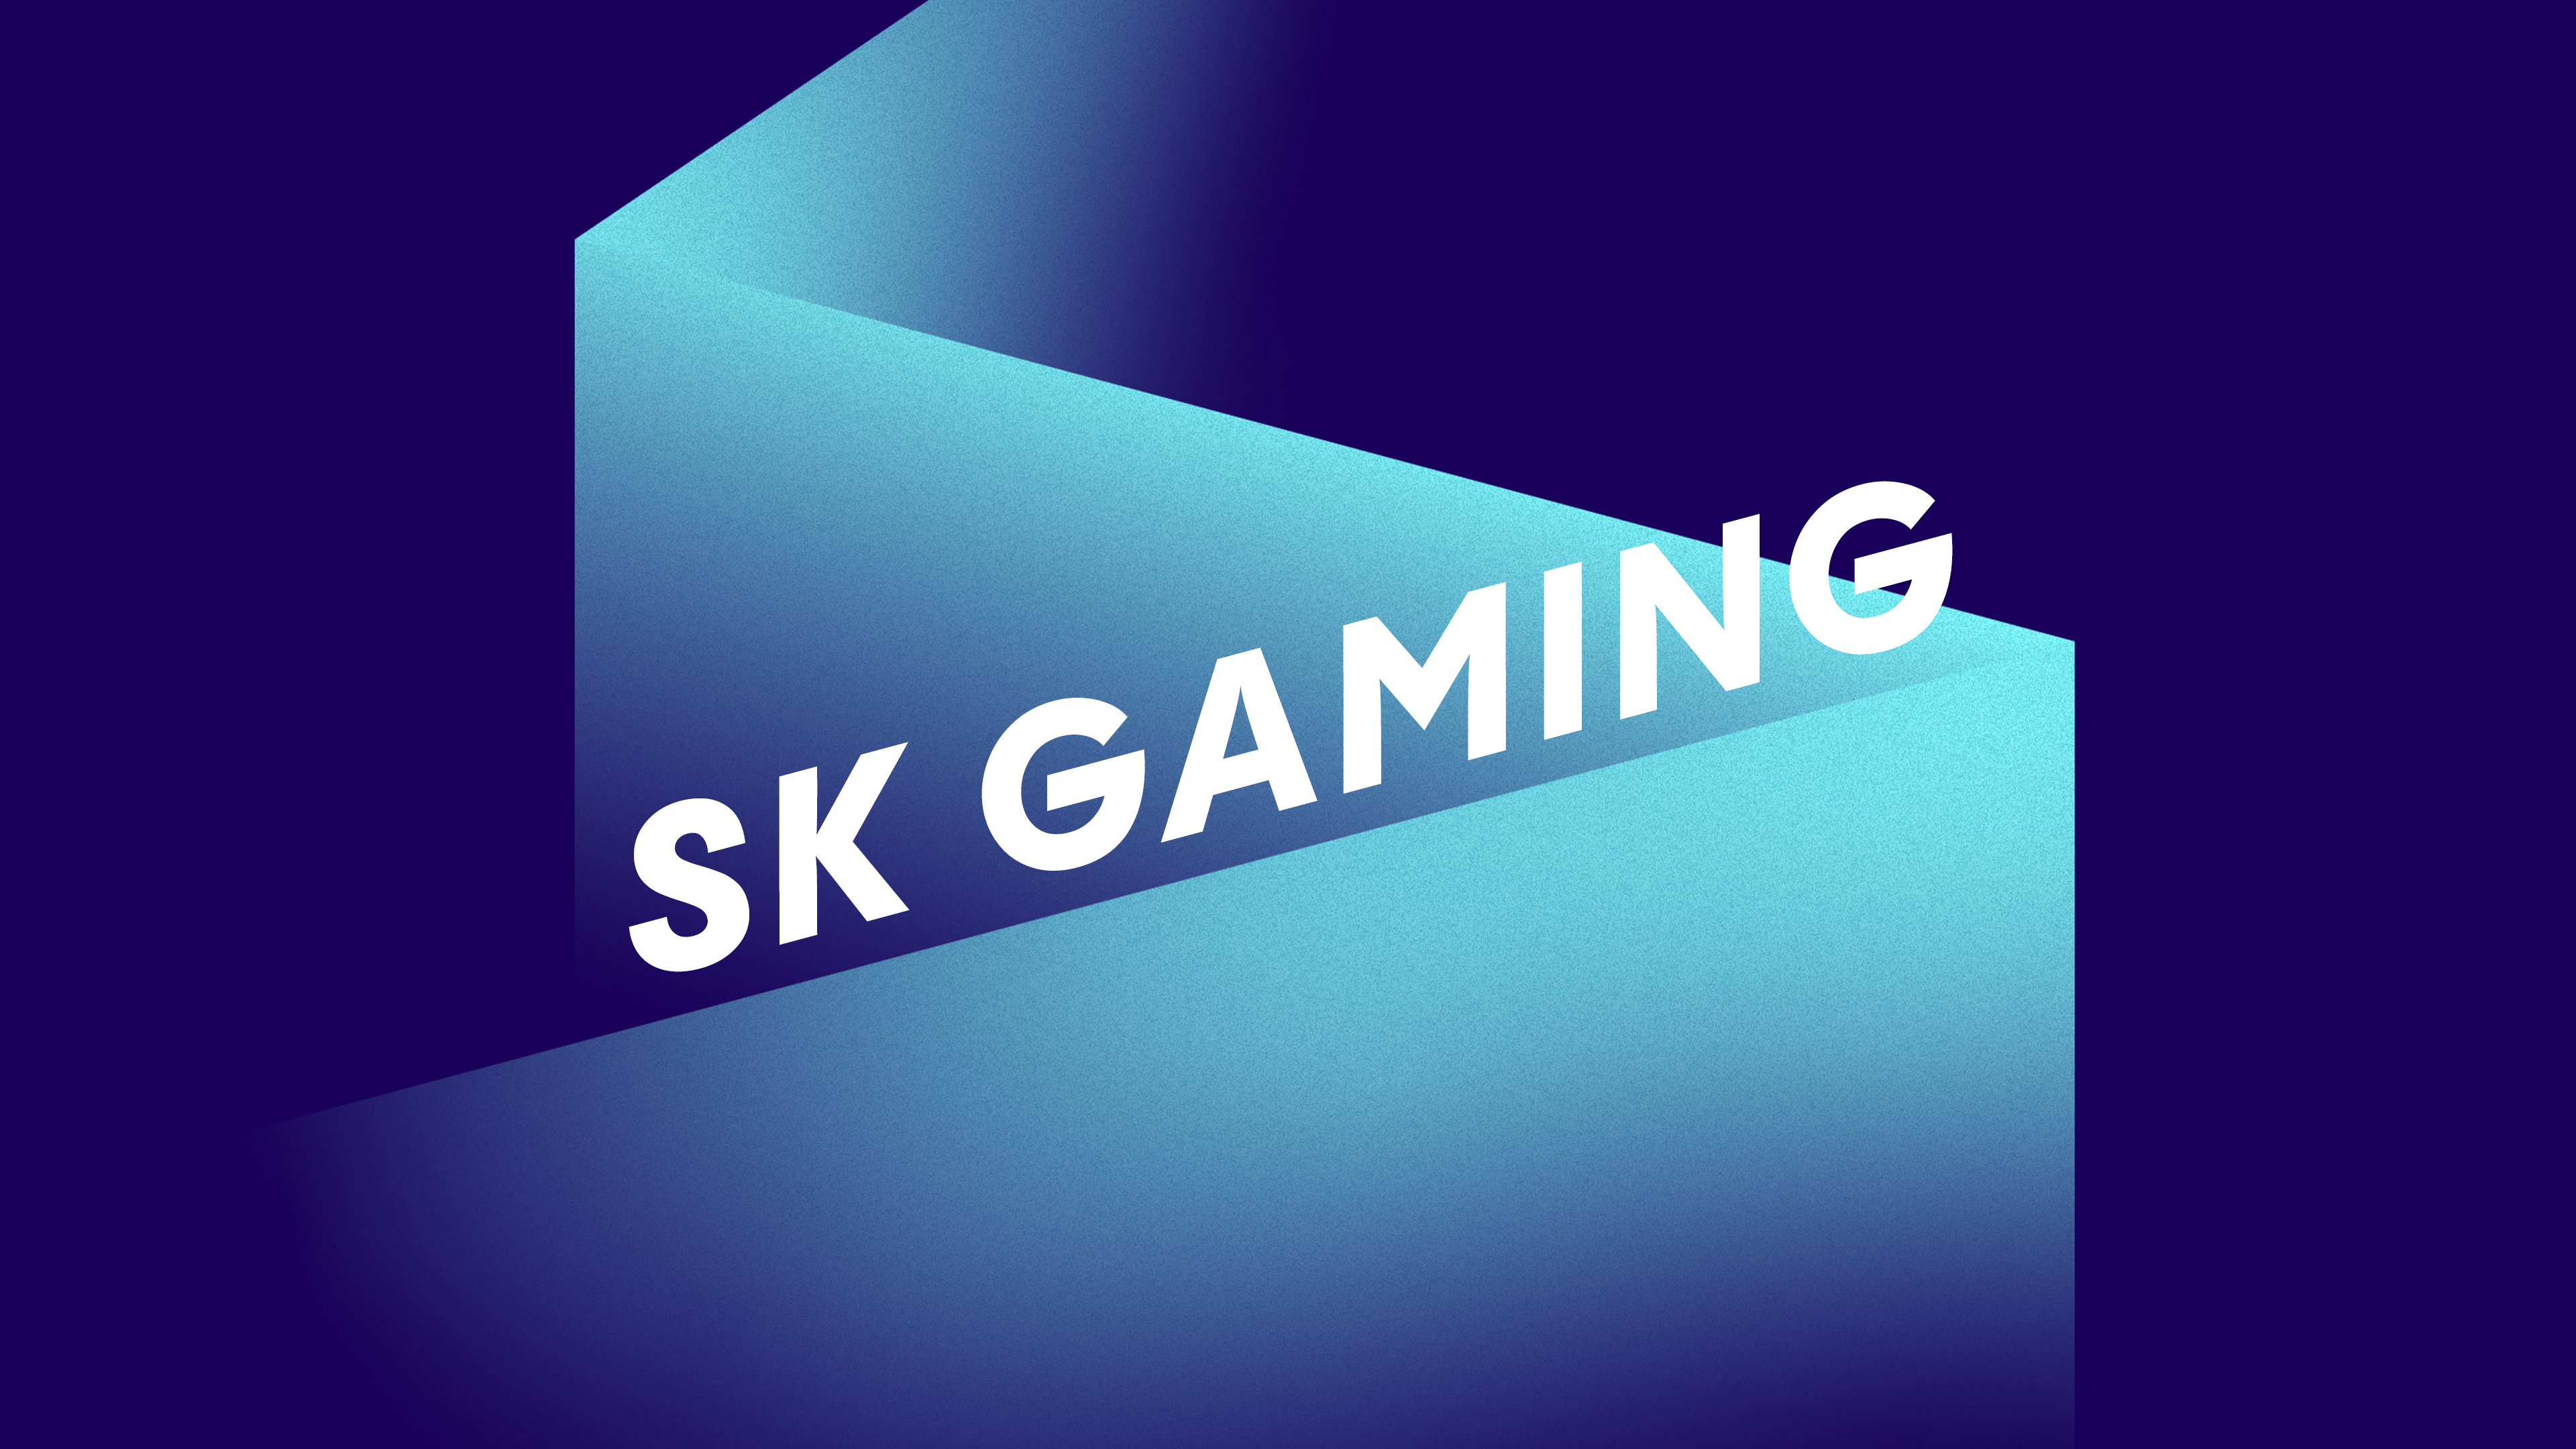 Do gaming esport logo 3d by Skgaming123 | Fiverr